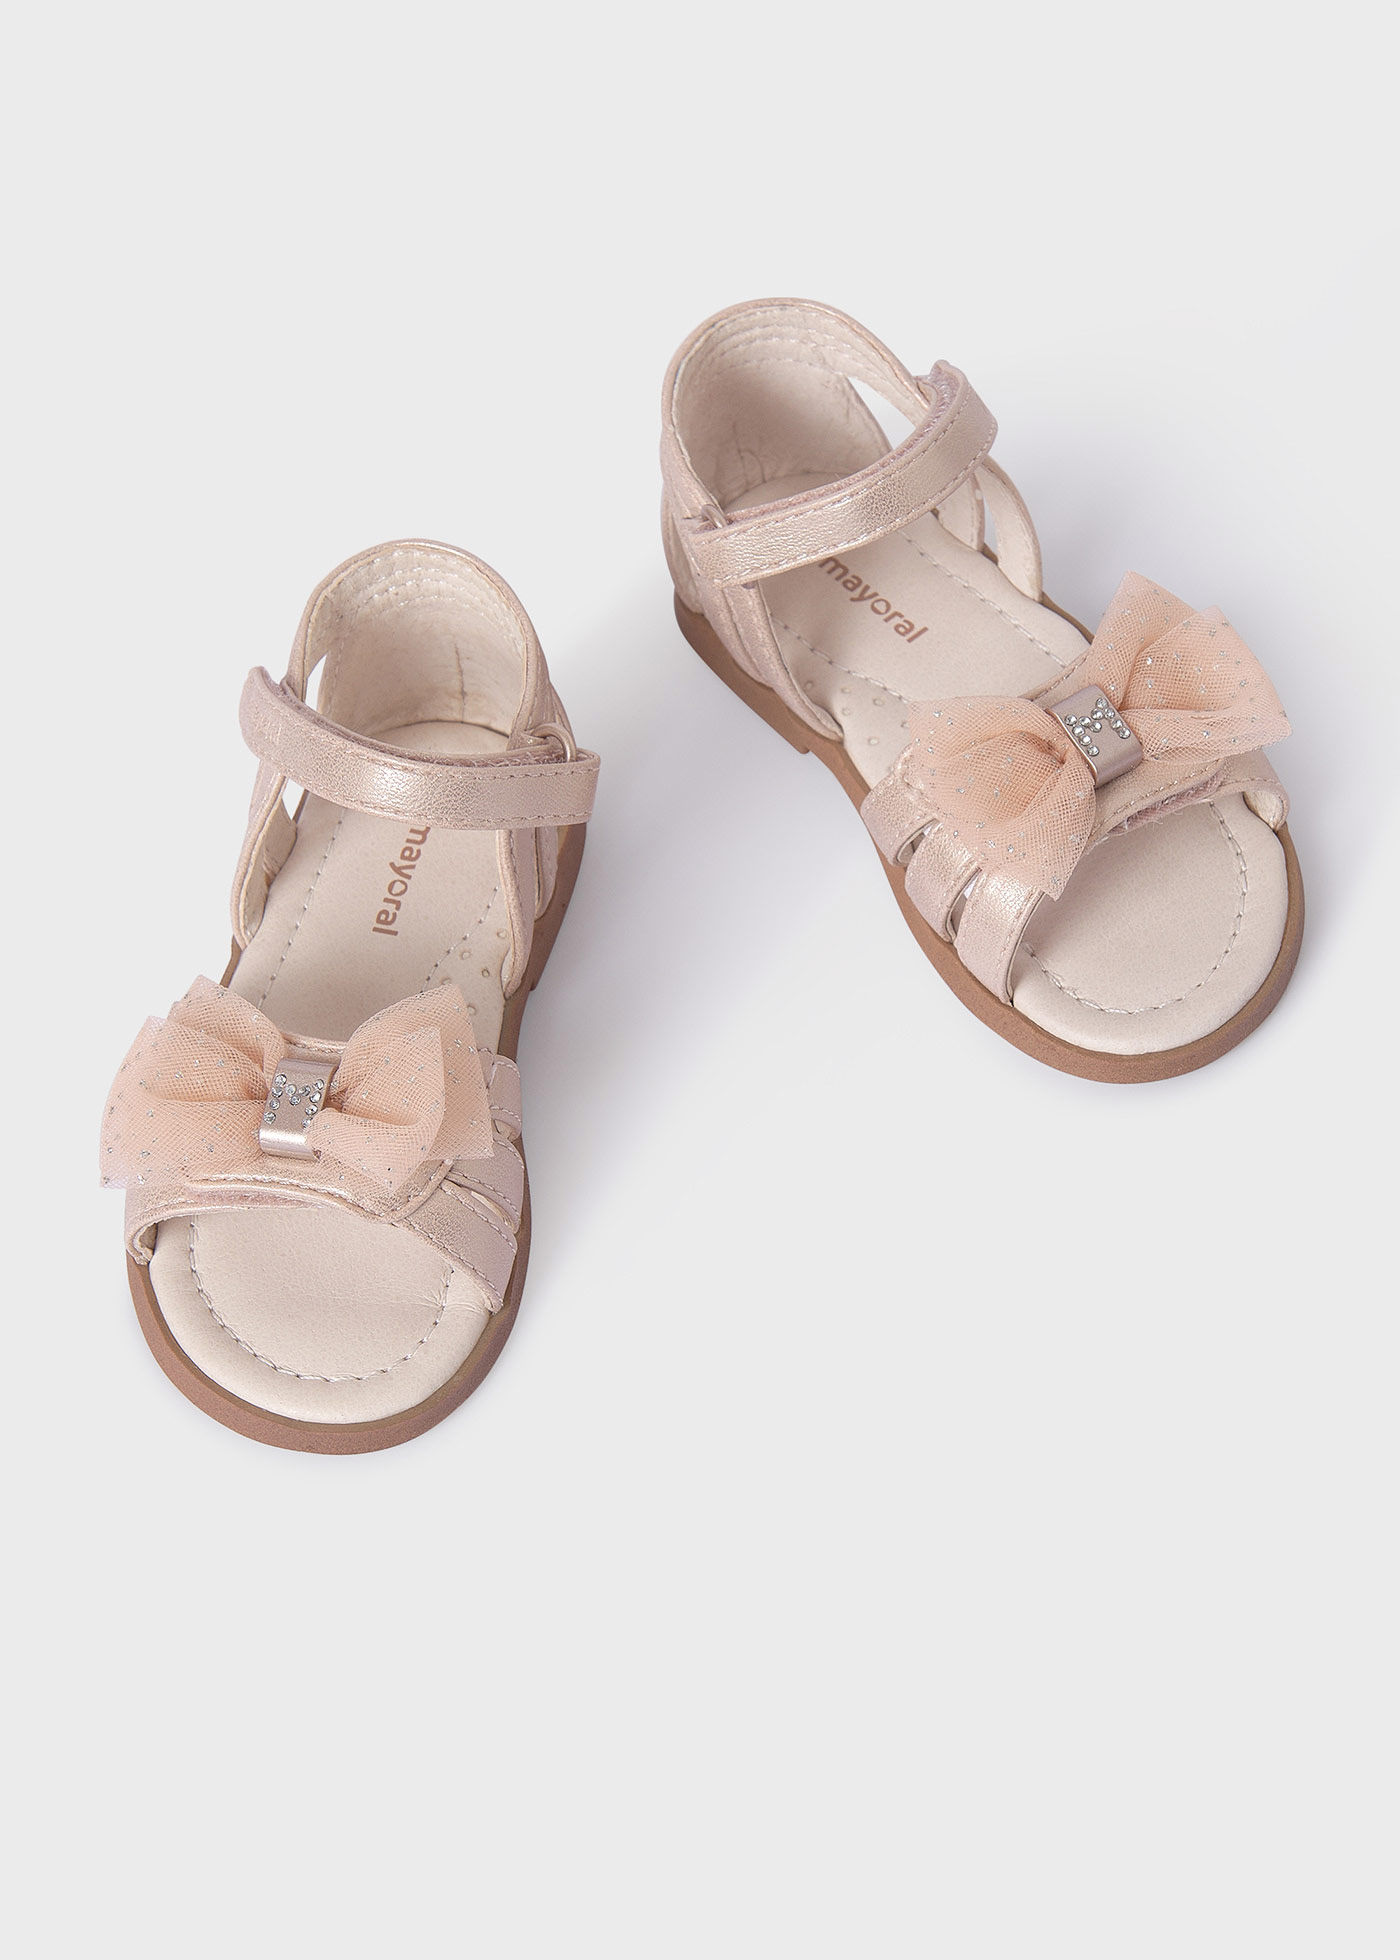 Sandalen festliche Mode nachhaltige Lederinnensohle Baby